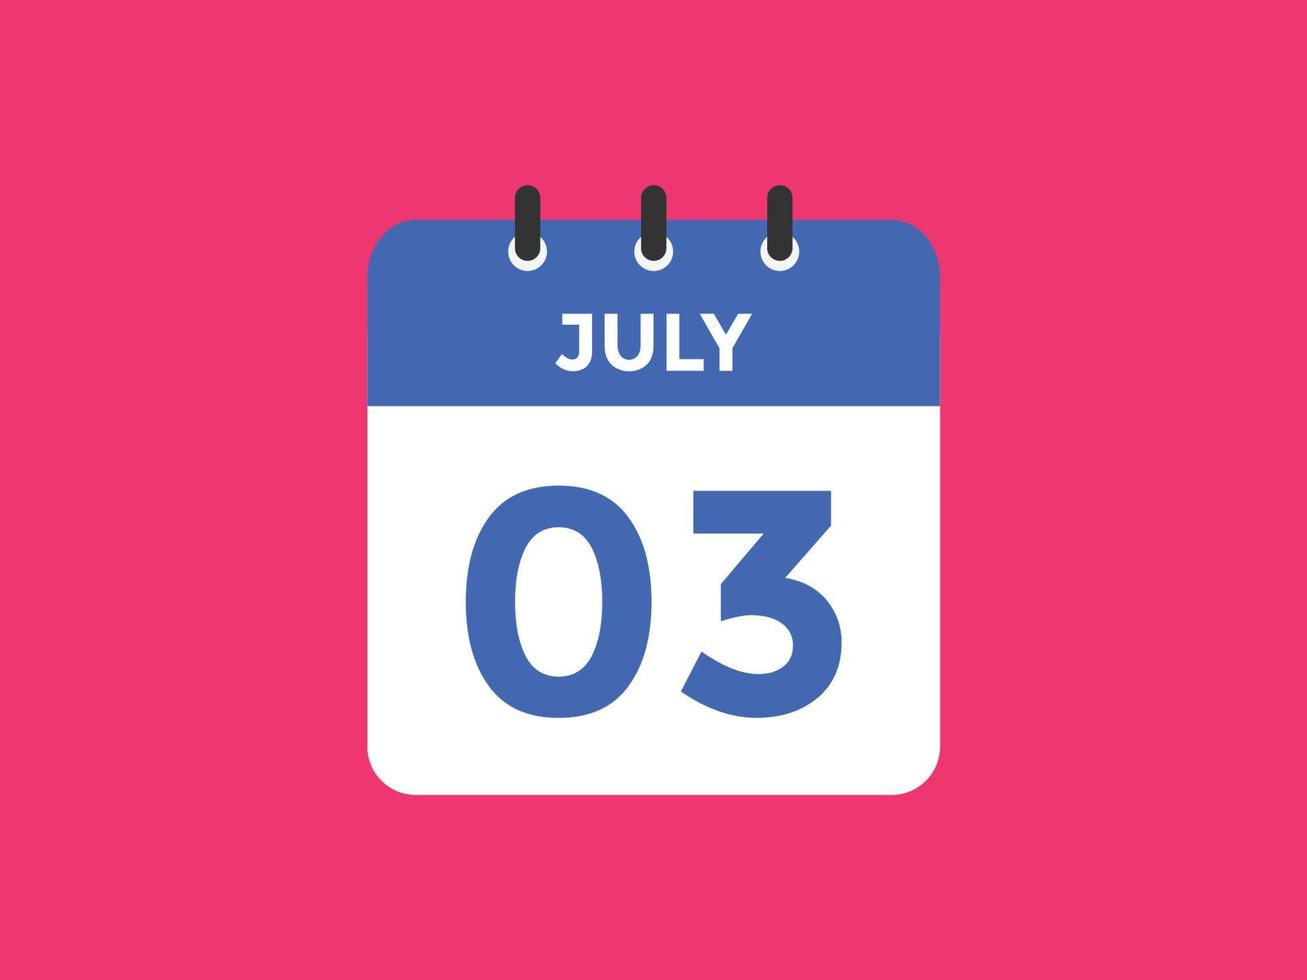 juli 3 kalender påminnelse. 3:e juli dagligen kalender ikon mall. kalender 3:e juli ikon design mall. vektor illustration